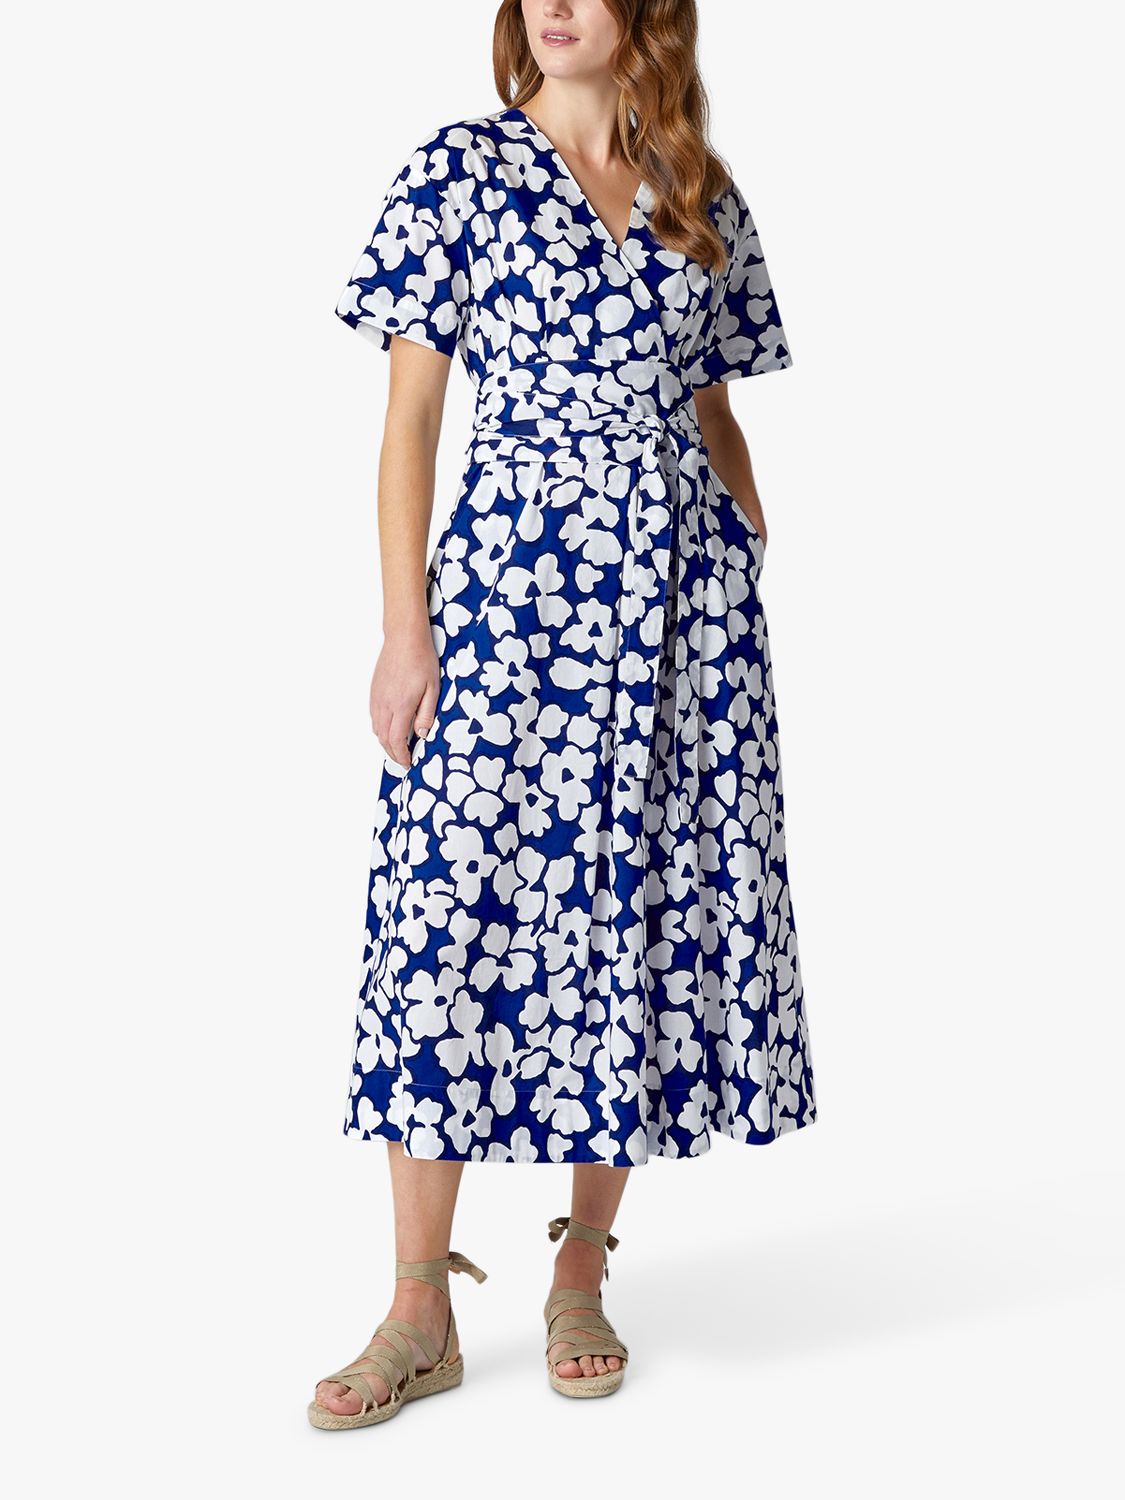 Jasper Conran London Floral Midi Wrap Dress, Blue at John Lewis & Partners